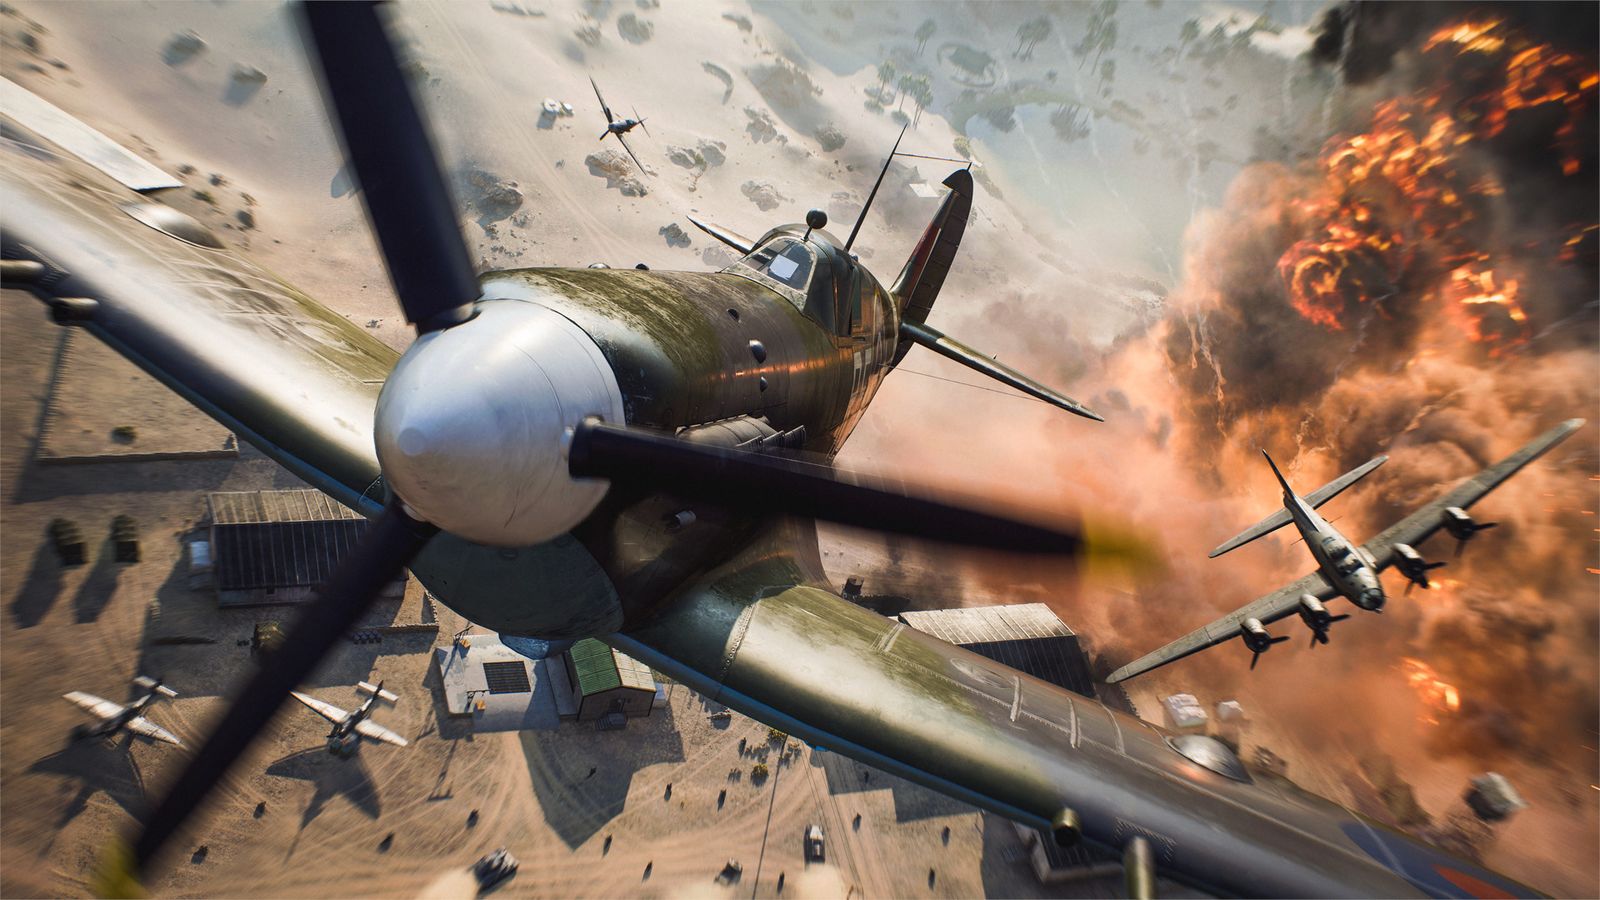 A plane flies away from an explosion in Battlefield Portal.